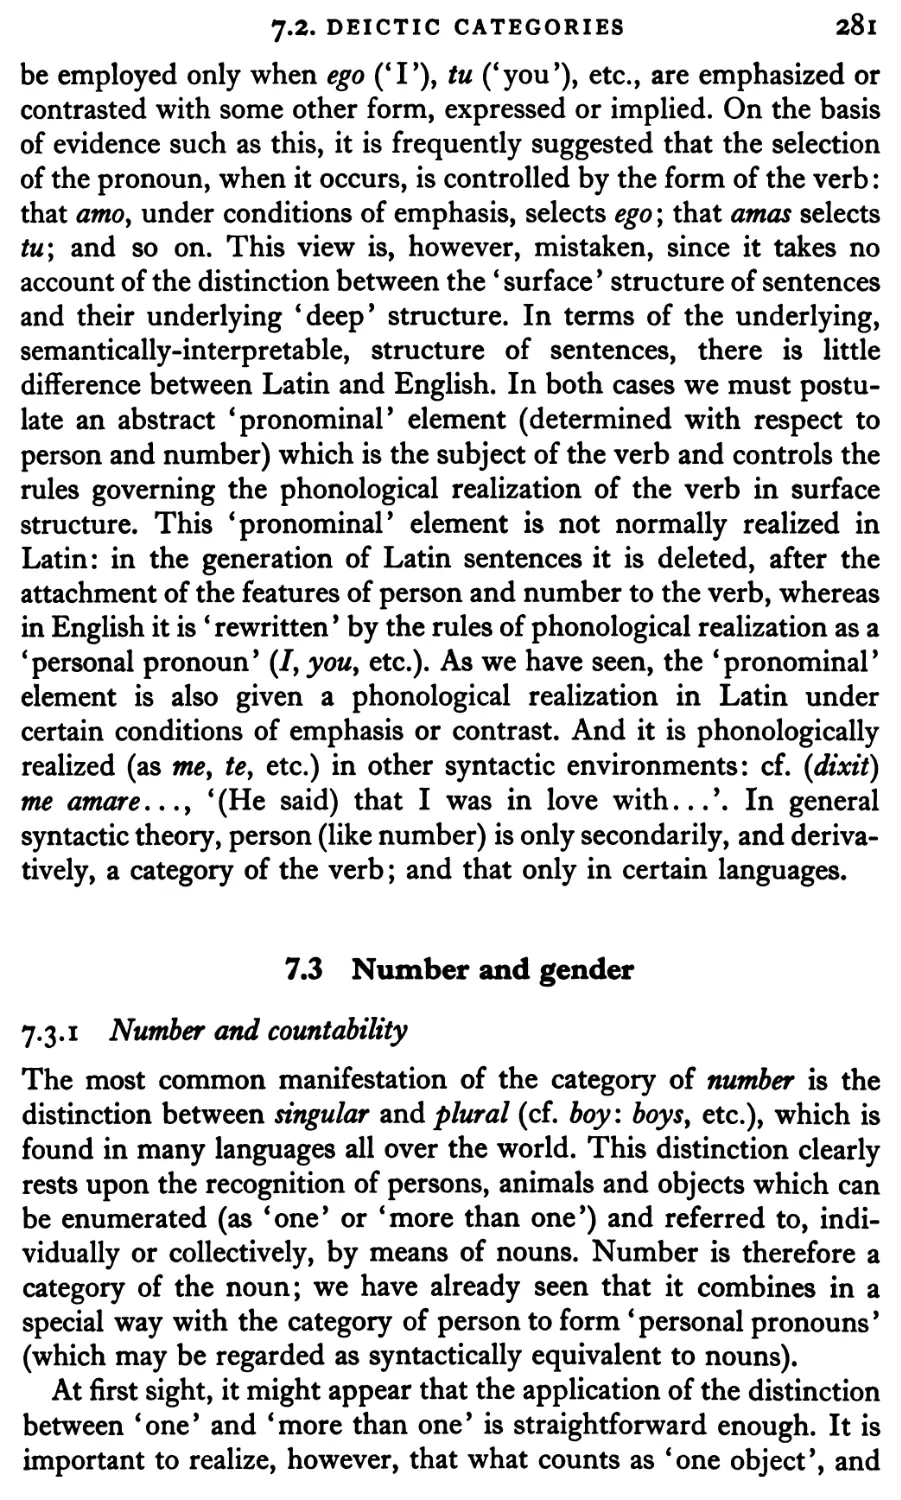 7.3 Number and gender